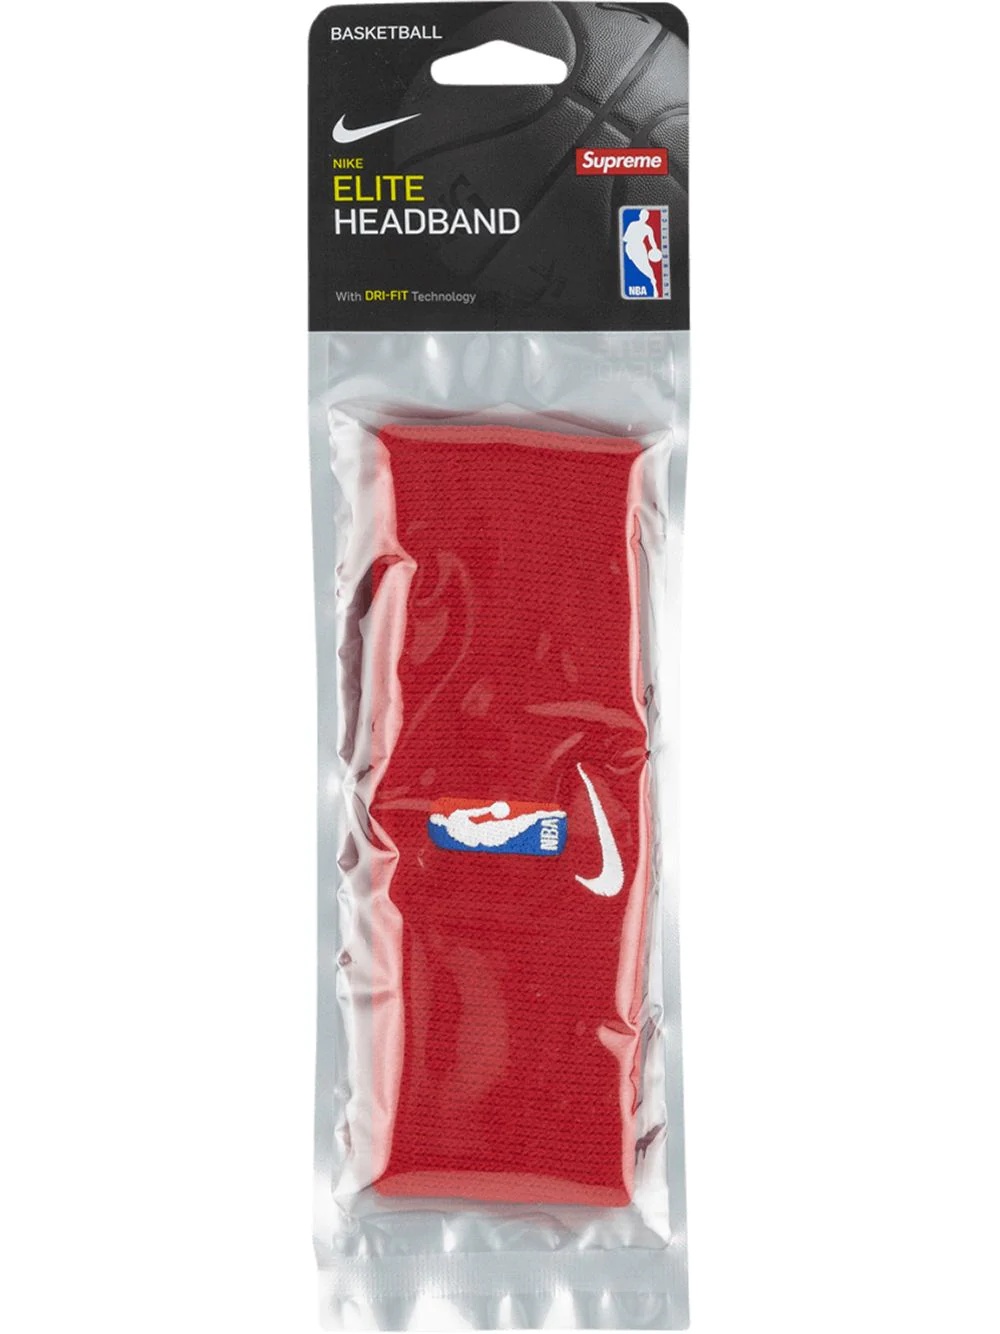 x Nike Elite headband - 1